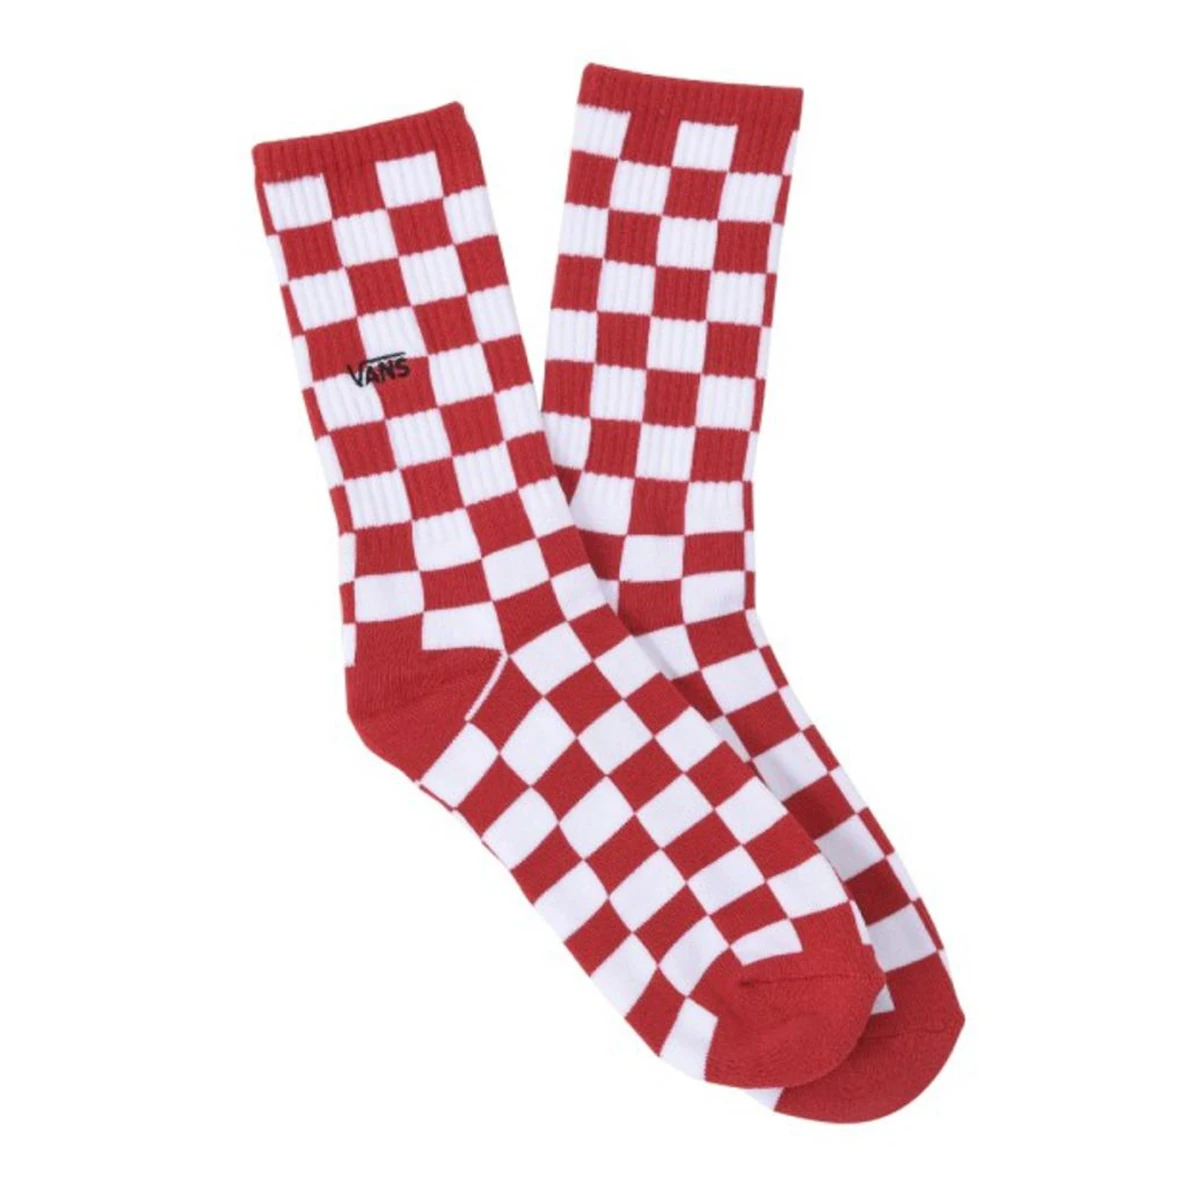 Vans Checkerboard II Red/White Çorap VN0A3H3NRLM1 - VN0A3H3ORLM1